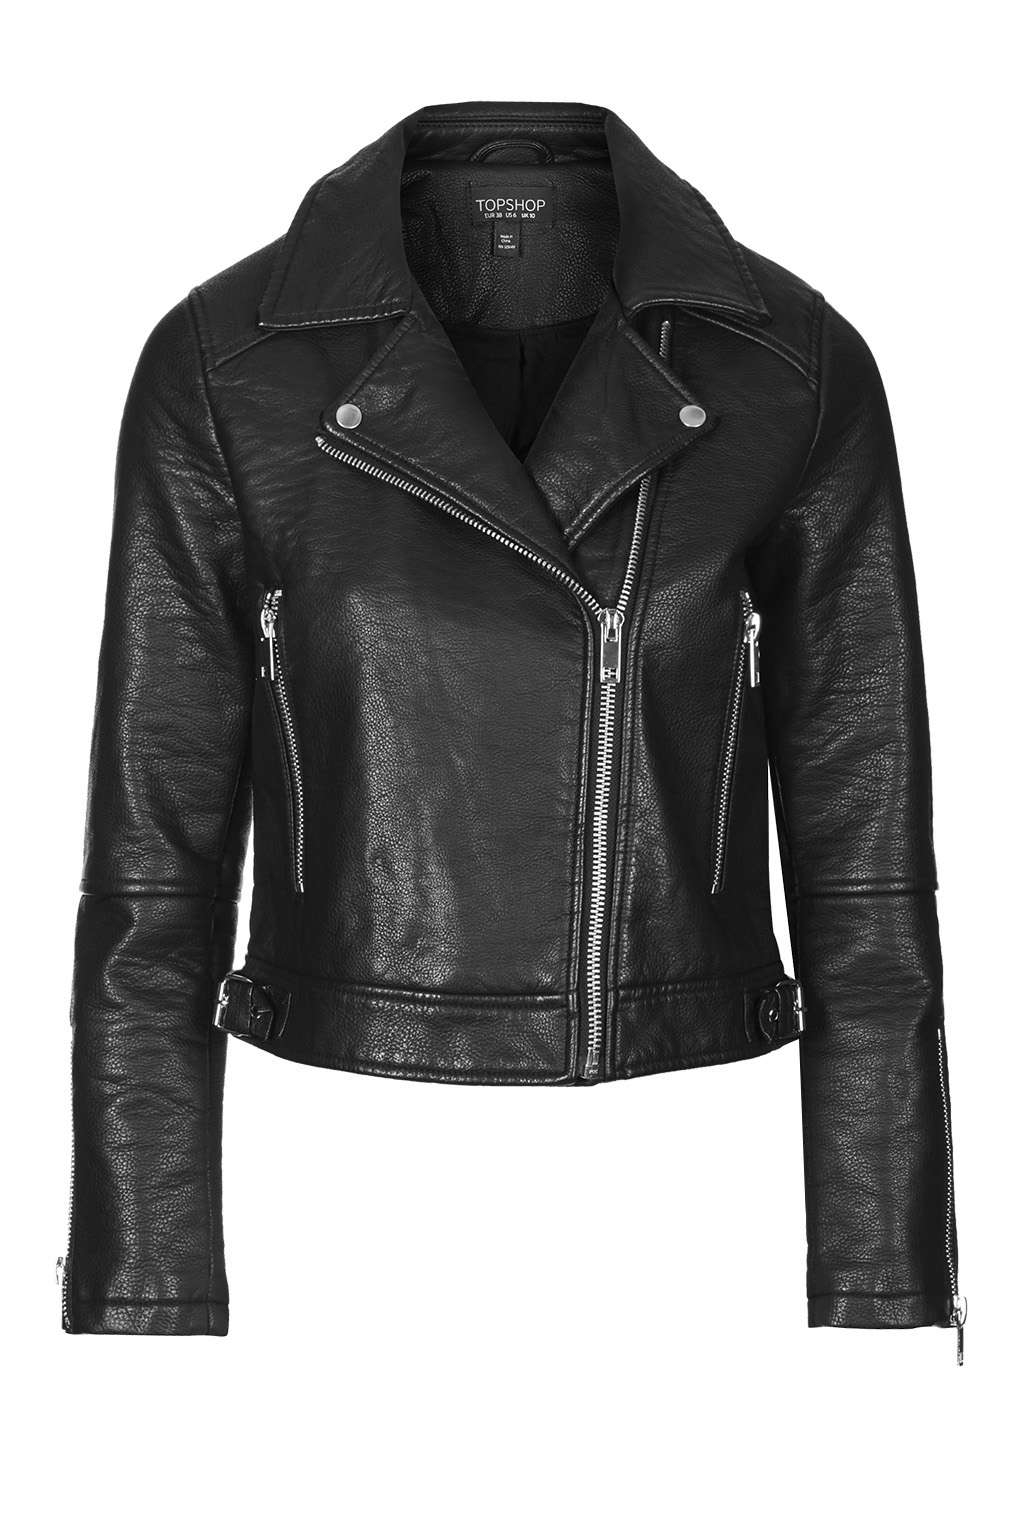 TOPSHOP Faux Leather Biker Jacket in Black - Lyst